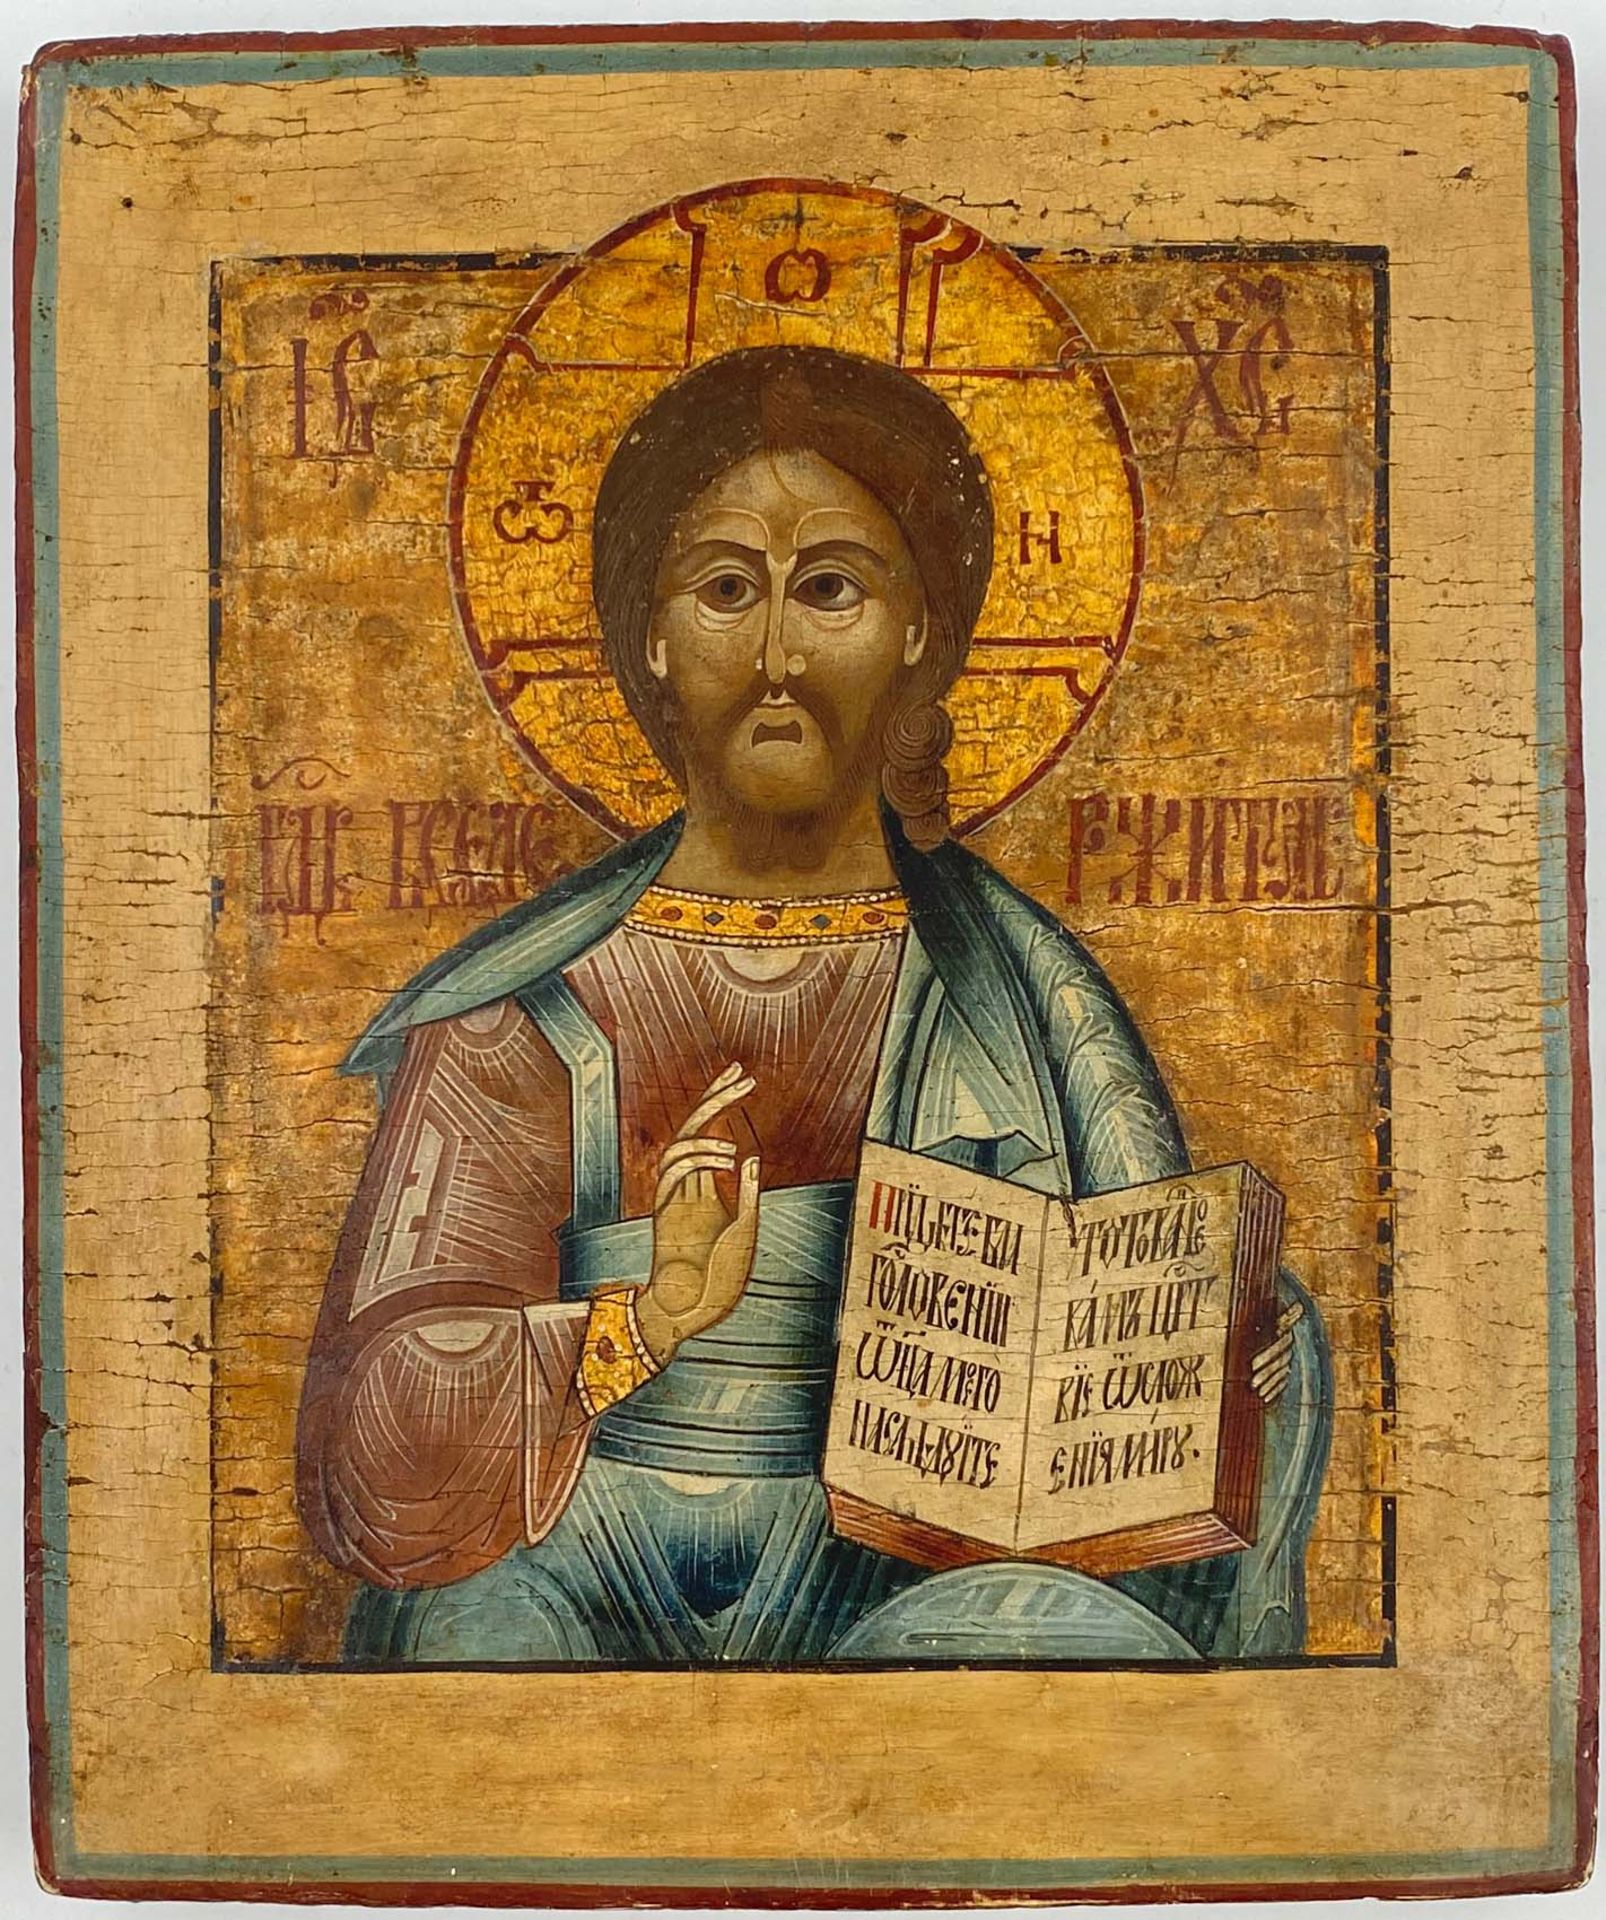 ICON (XIX): Christ Pantocrator.33 cm x 27 cm. Painting. Mixed media. Russia?IKONE (XIX): Christus